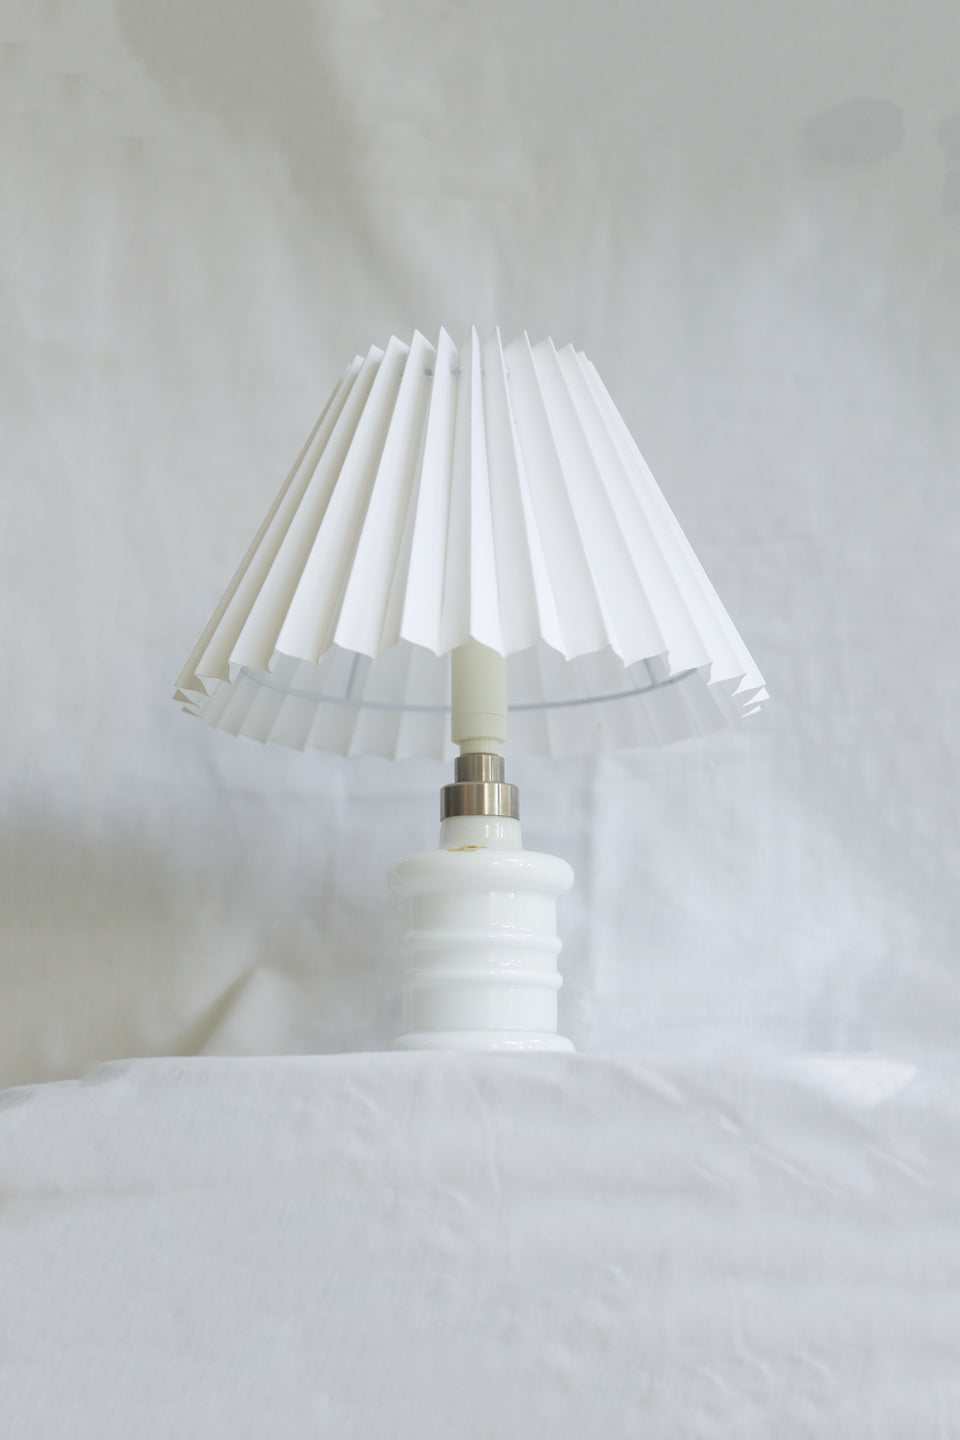 Danish Vintage Holmegaard Table Lamp Apoteker Small/ホルムガード テーブルランプ シセ・ヴェアナー スモールサイズ 間接照明 デンマークヴィンテージ